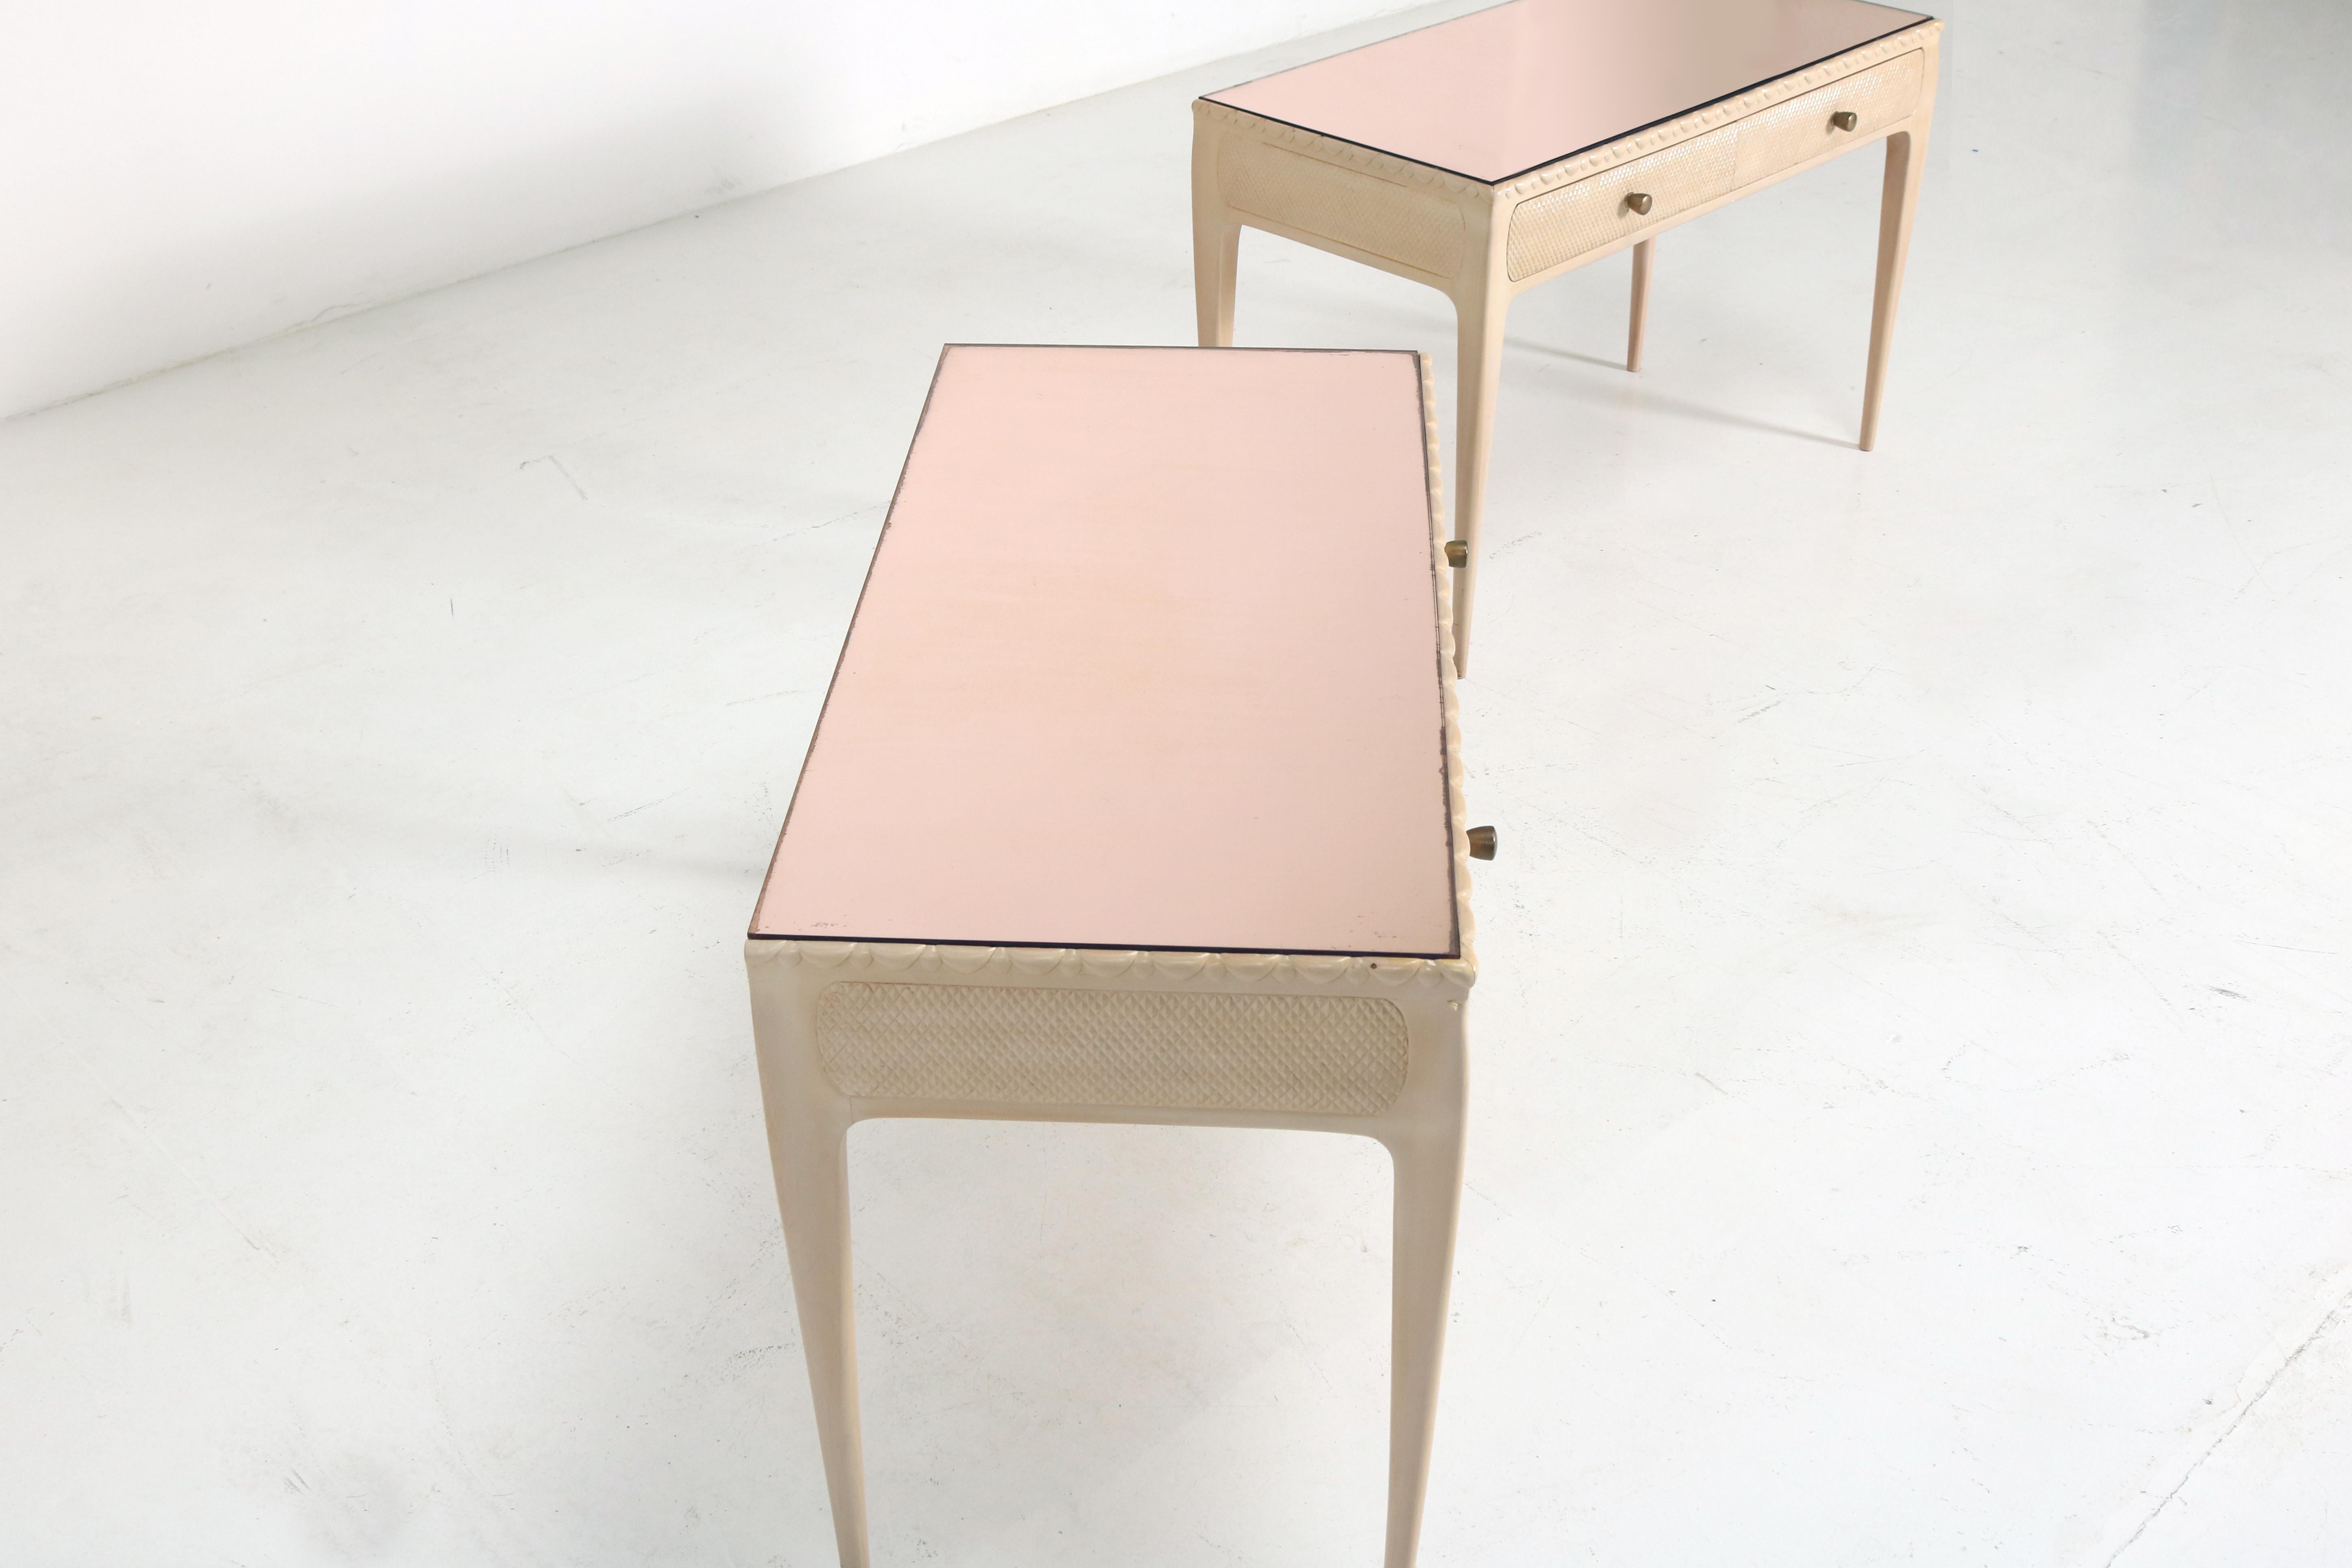 Osvaldo Borsani Elegant Two bed side tables with drawers Italian Design ABV 1950 For Sale 3